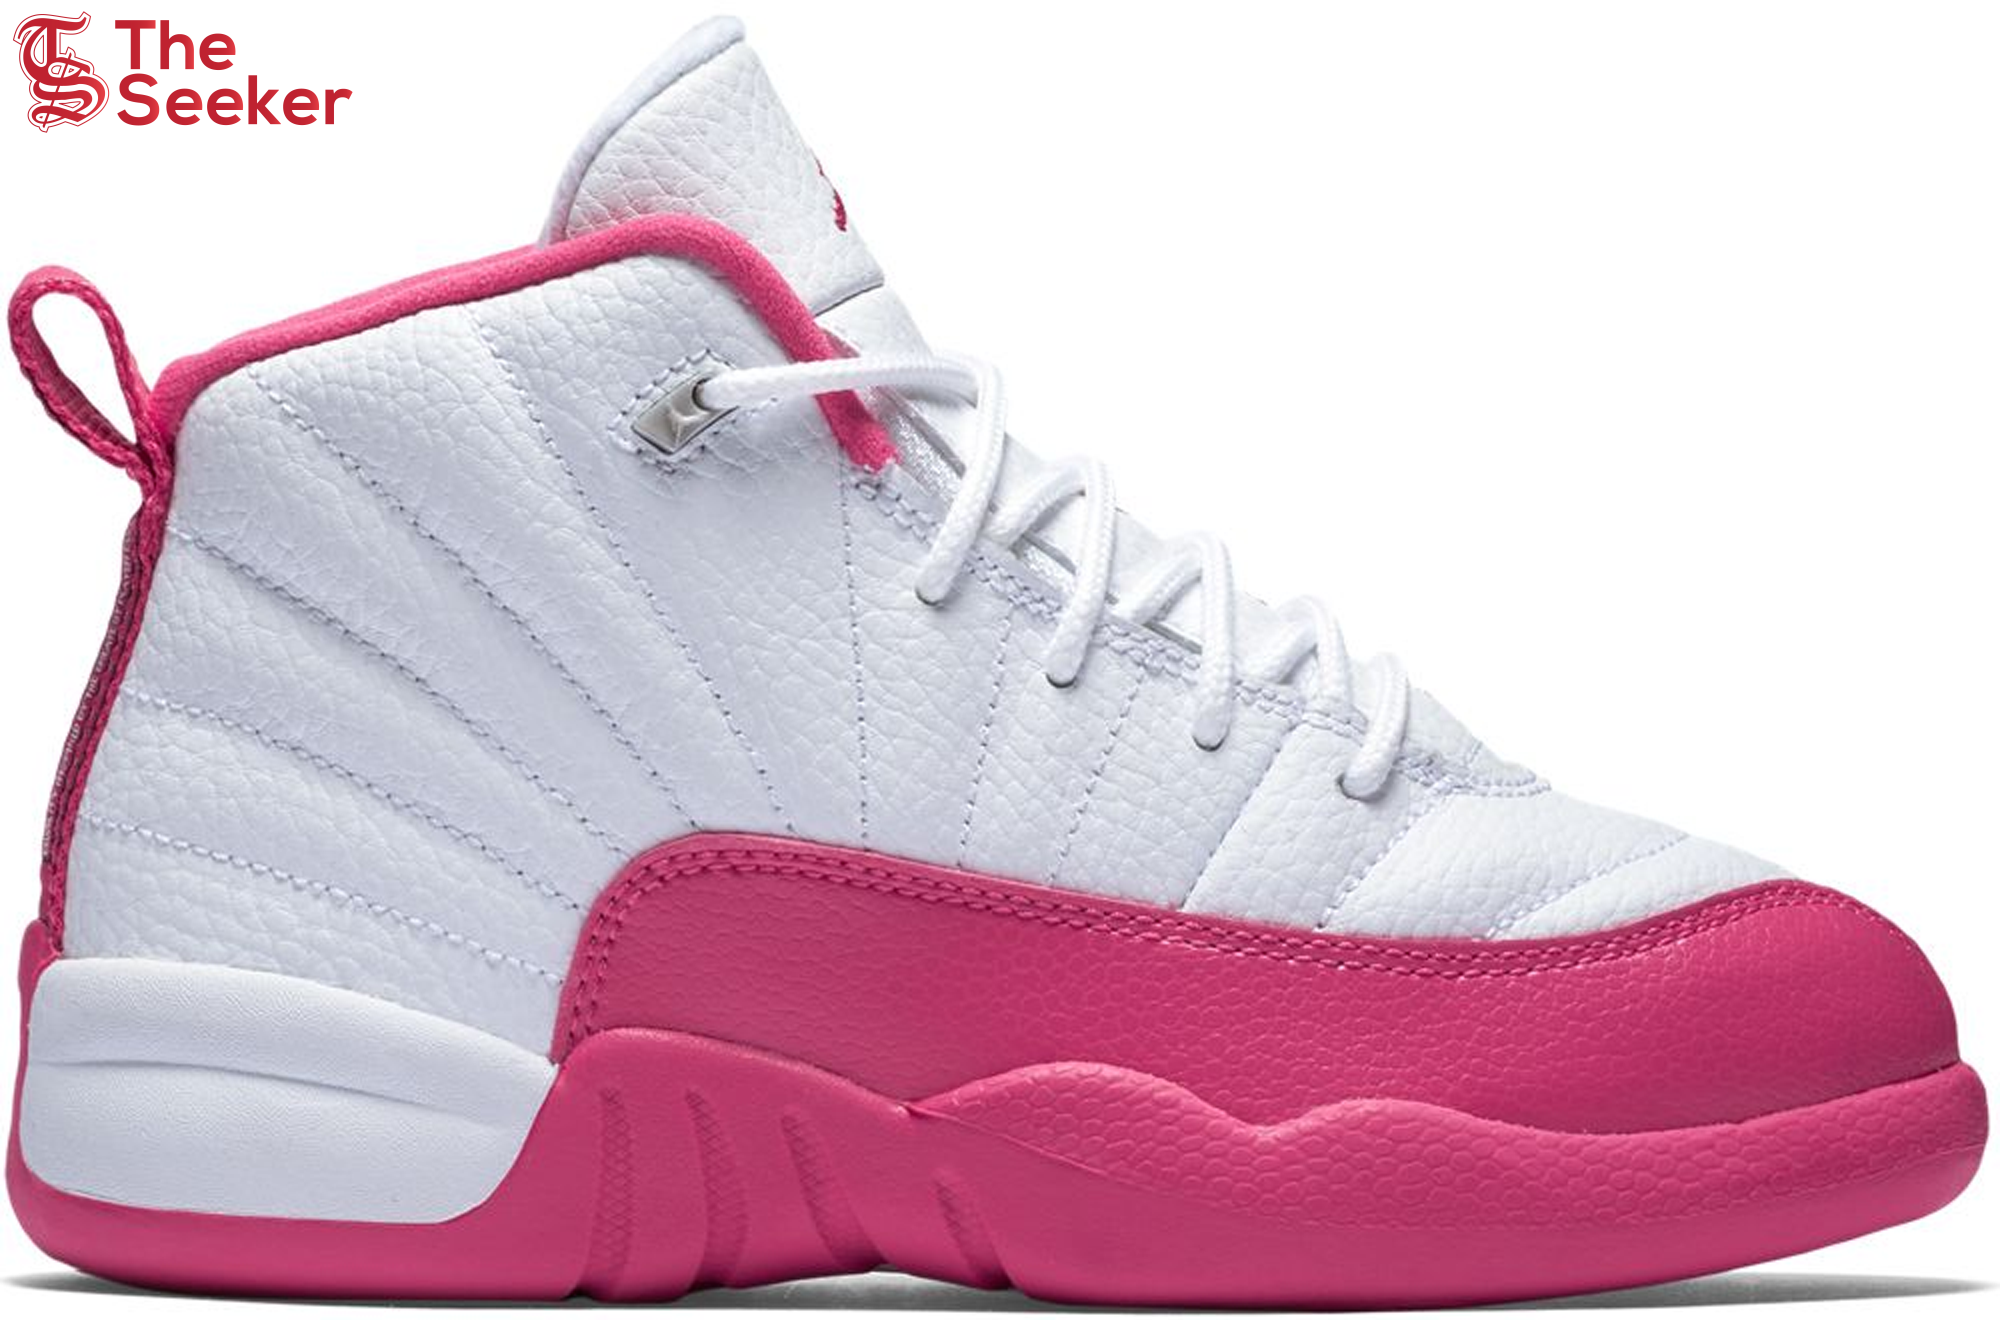 Jordan 12 Retro Dynamic Pink (PS)